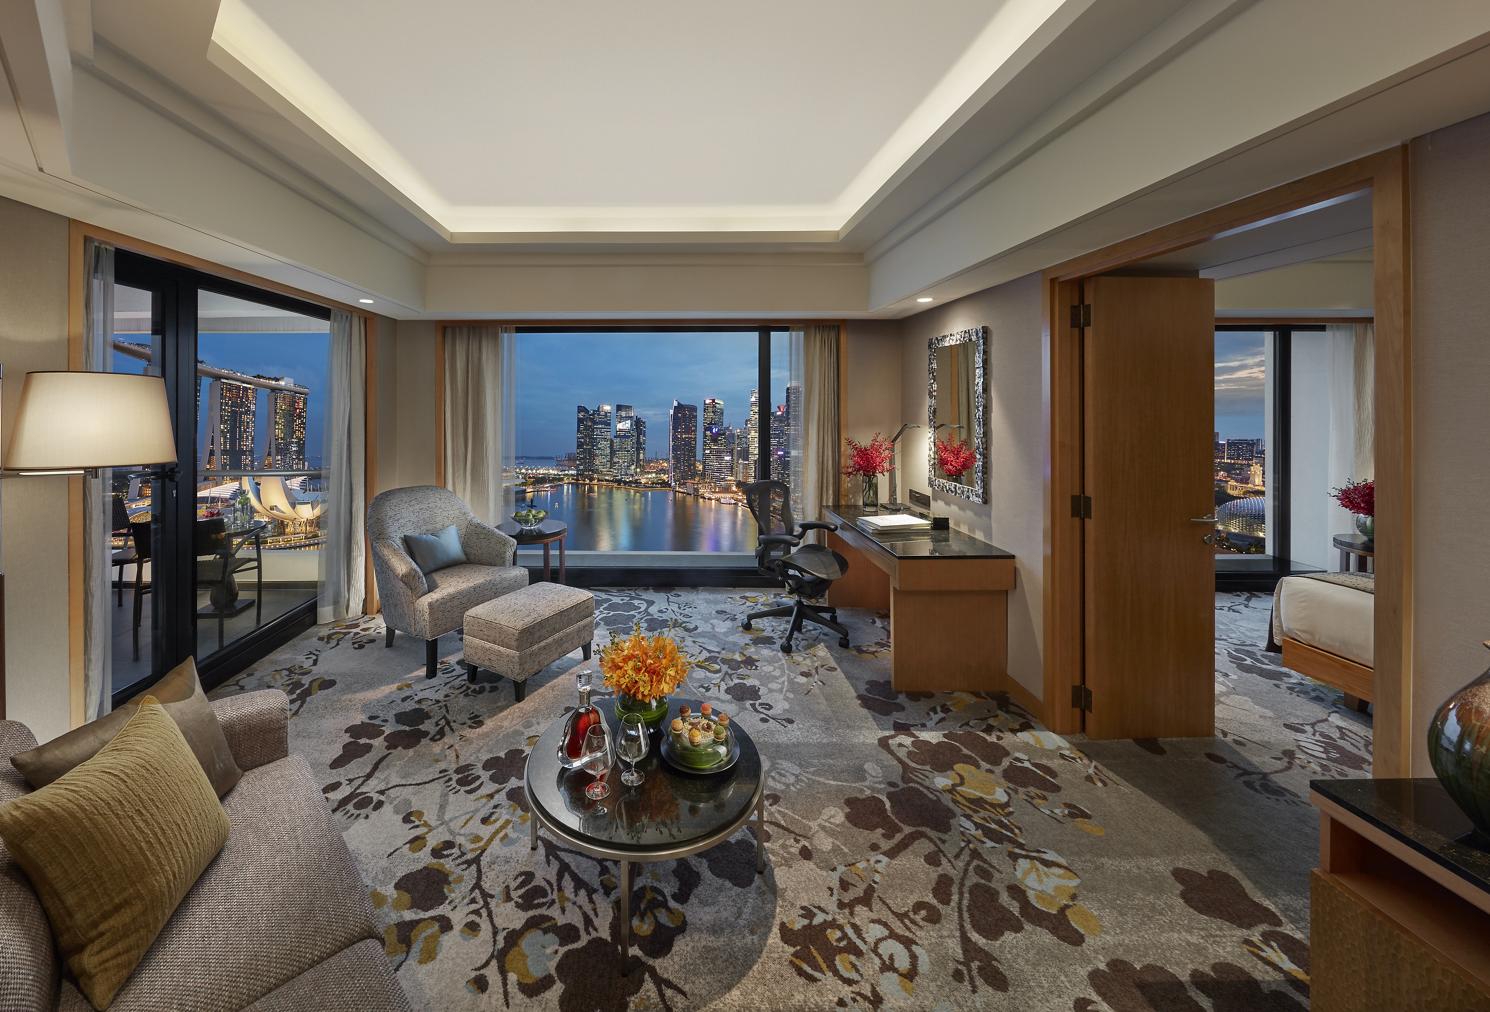 Marina Bay Suite living room at Mandarin Oriental Singapore